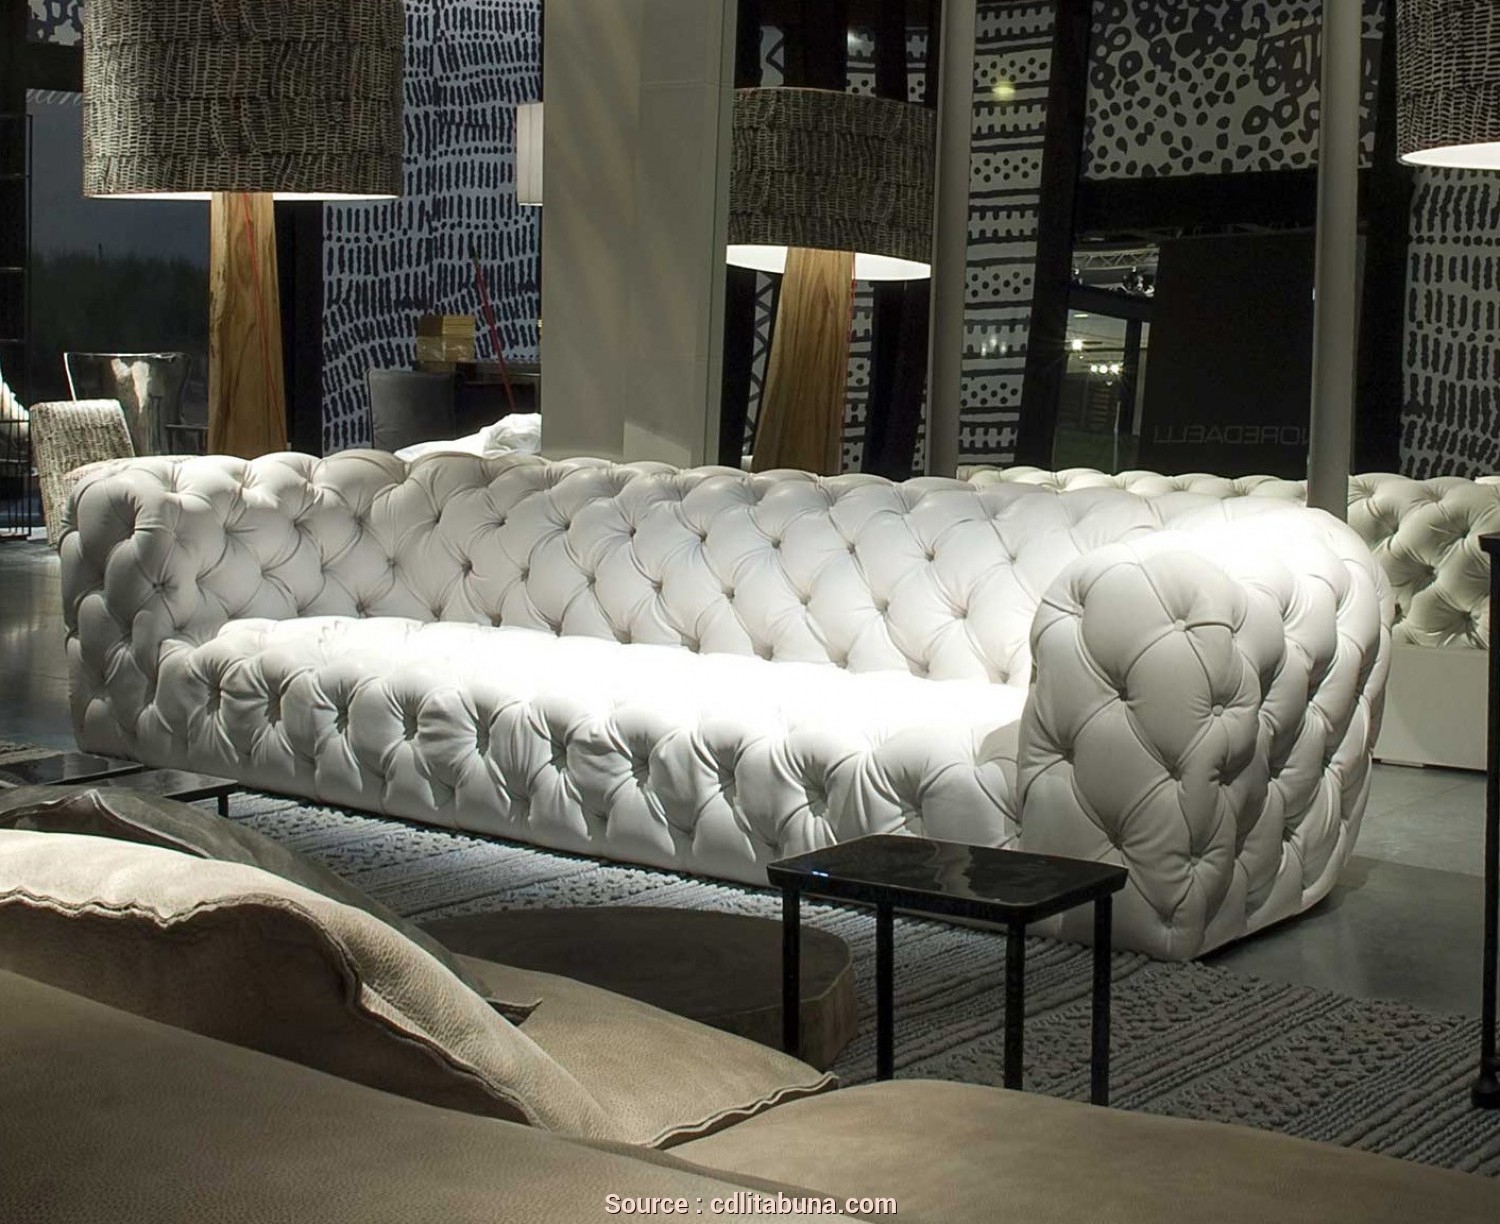 tufted white bonded leather sofa